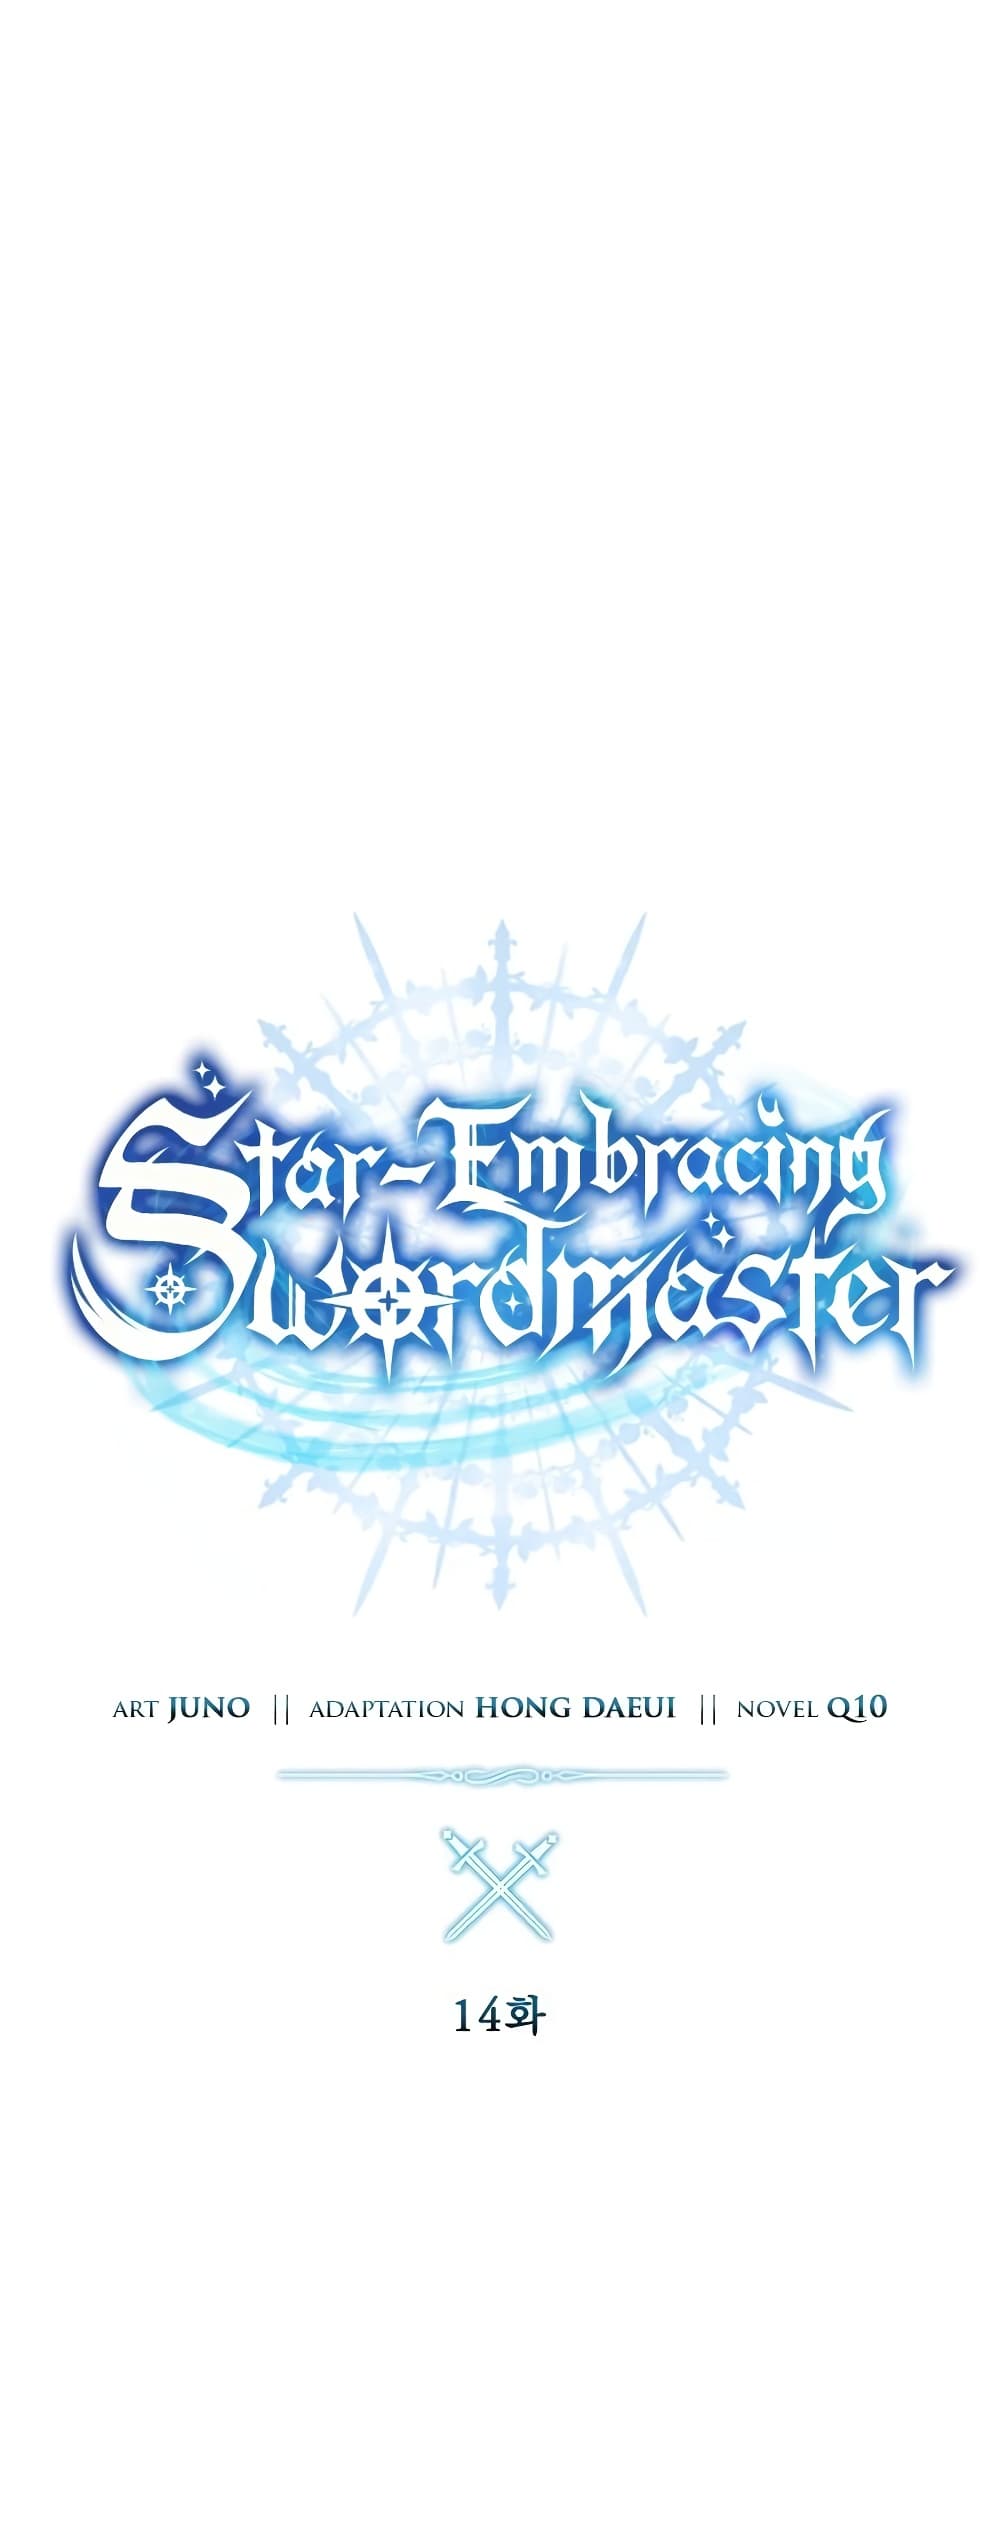 Star-Embracing Swordmaster 14-14